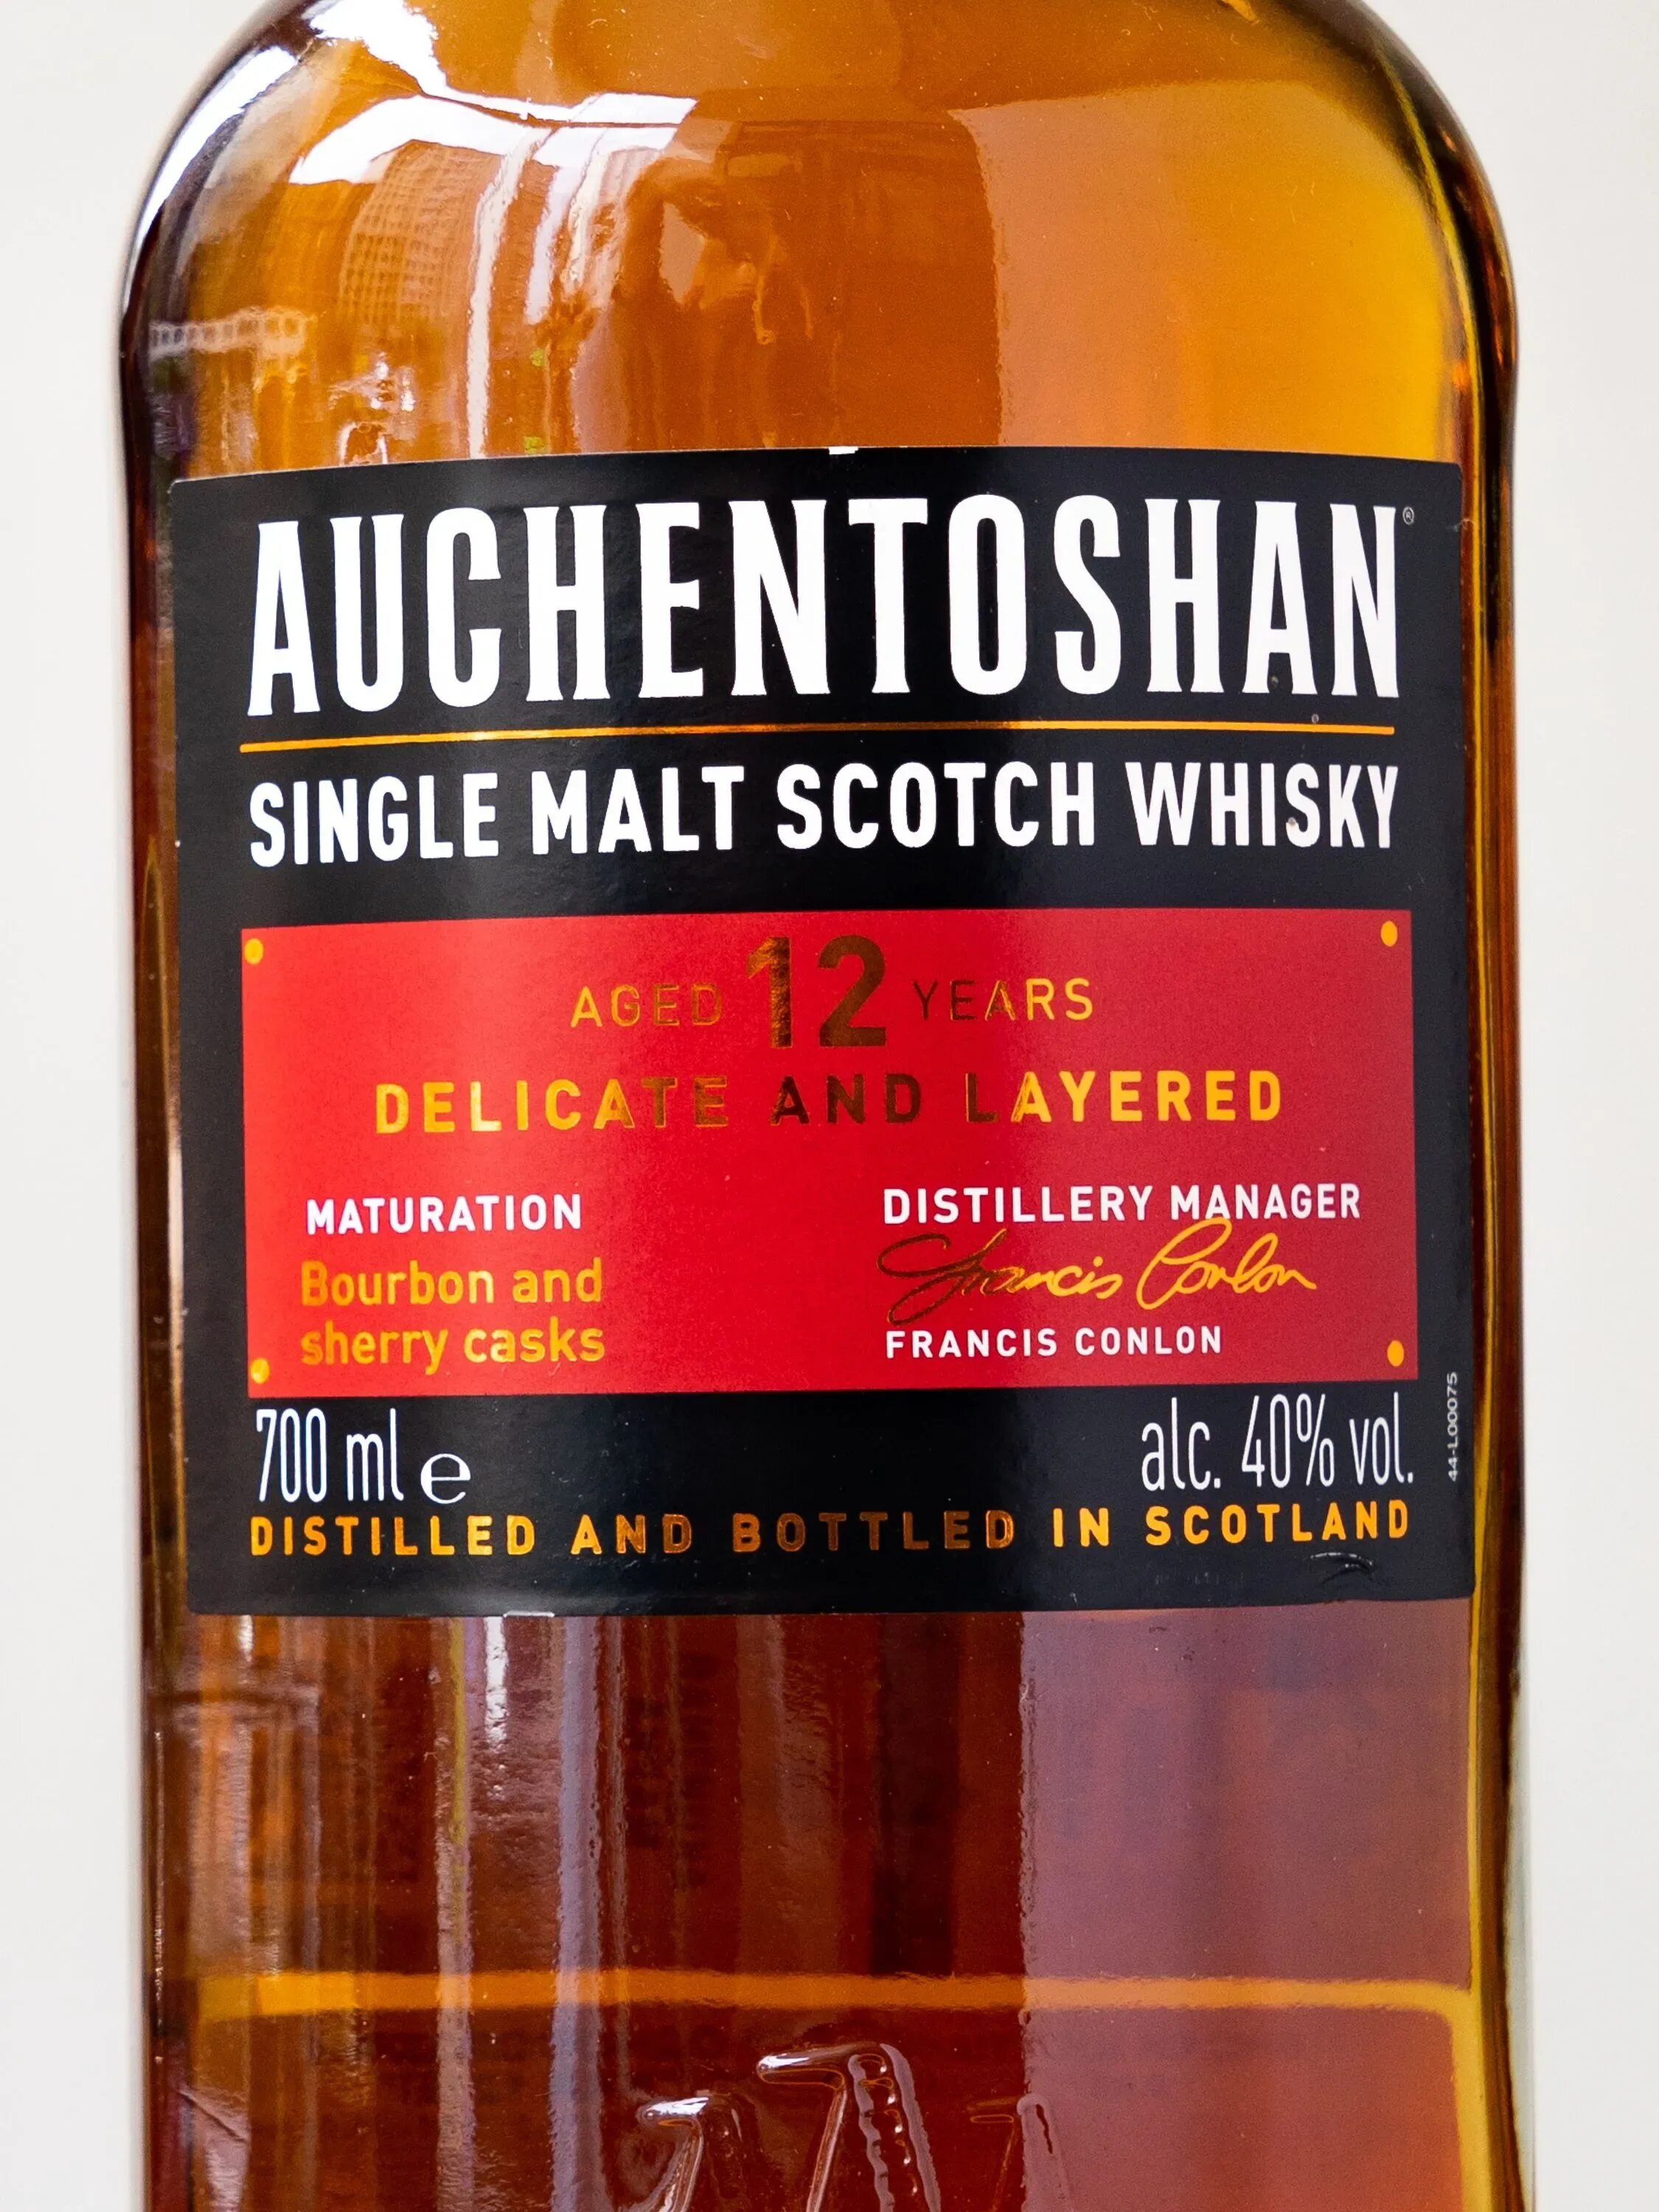 Auchentoshan цена 0.7. Окентошен 12. Шотландский виски Auchentoshan. Виски Auchentoshan 12. Виски аушентошан 12 лет.